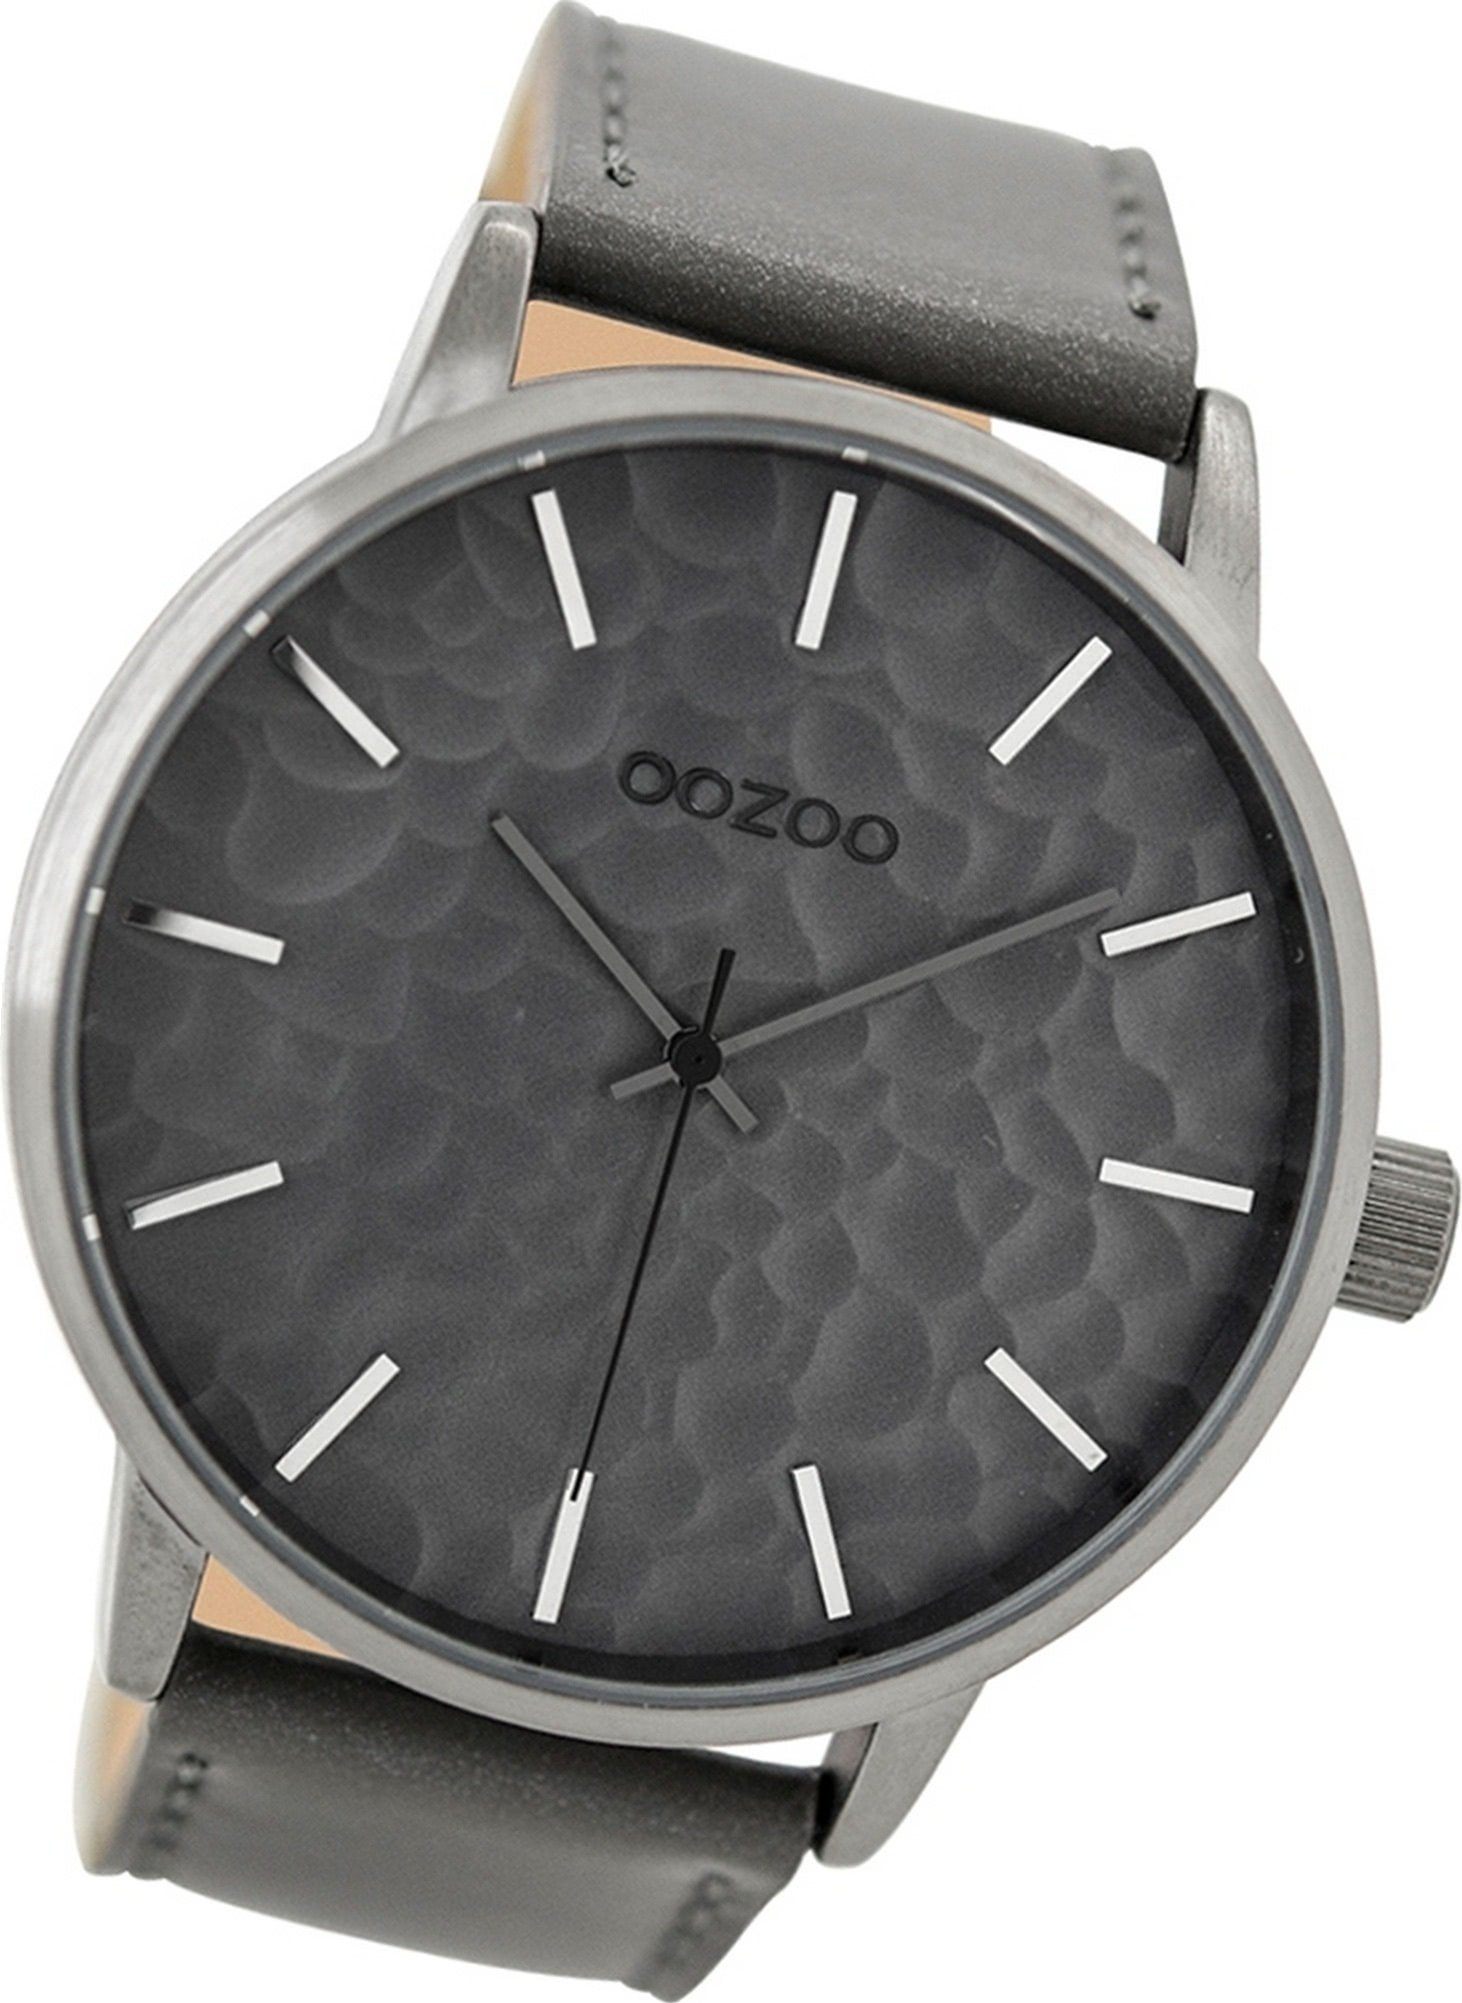 OOZOO Quarzuhr Oozoo Leder Herren Uhr C9440 Analog, Herrenuhr Lederarmband grau, rundes Gehäuse, extra groß (ca. 48mm)